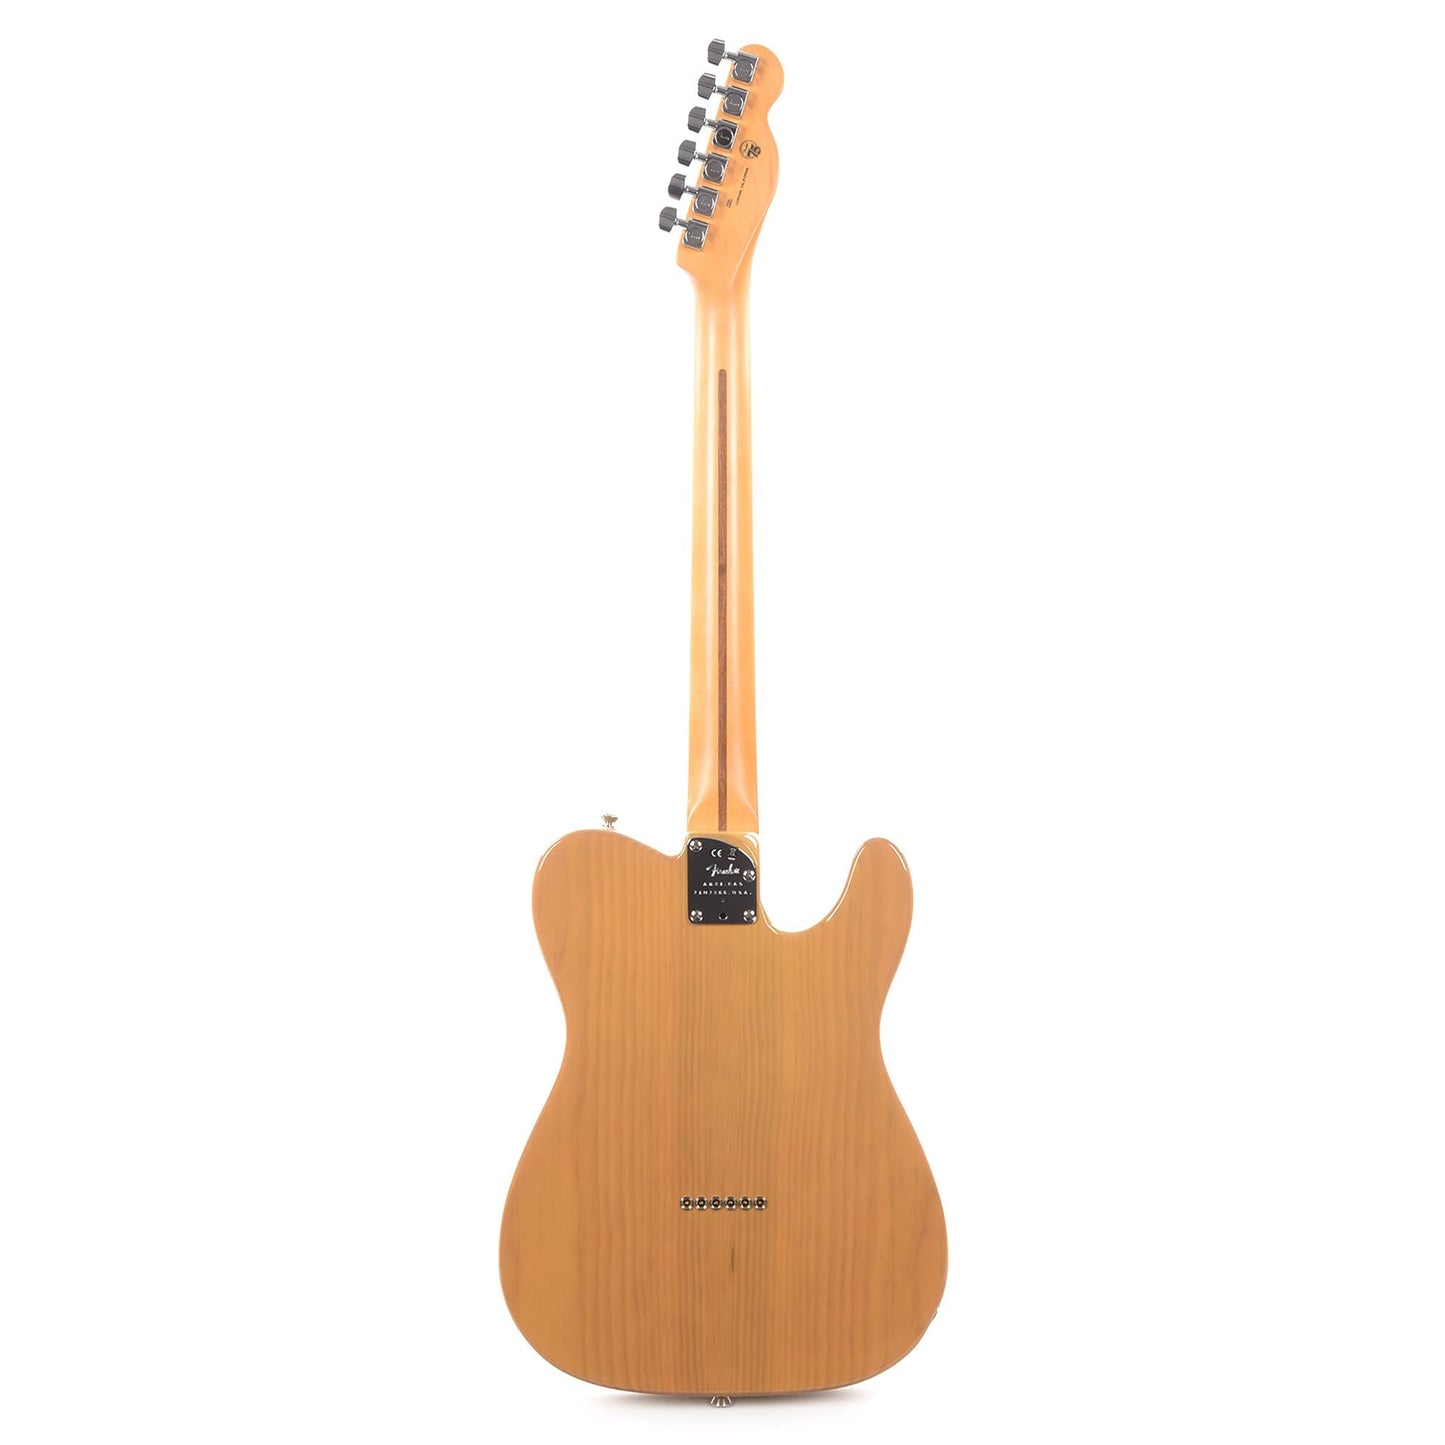 Fender American Professional II Telecaster Butterscotch Blonde LEFTY Electric Guitars / Left-Handed